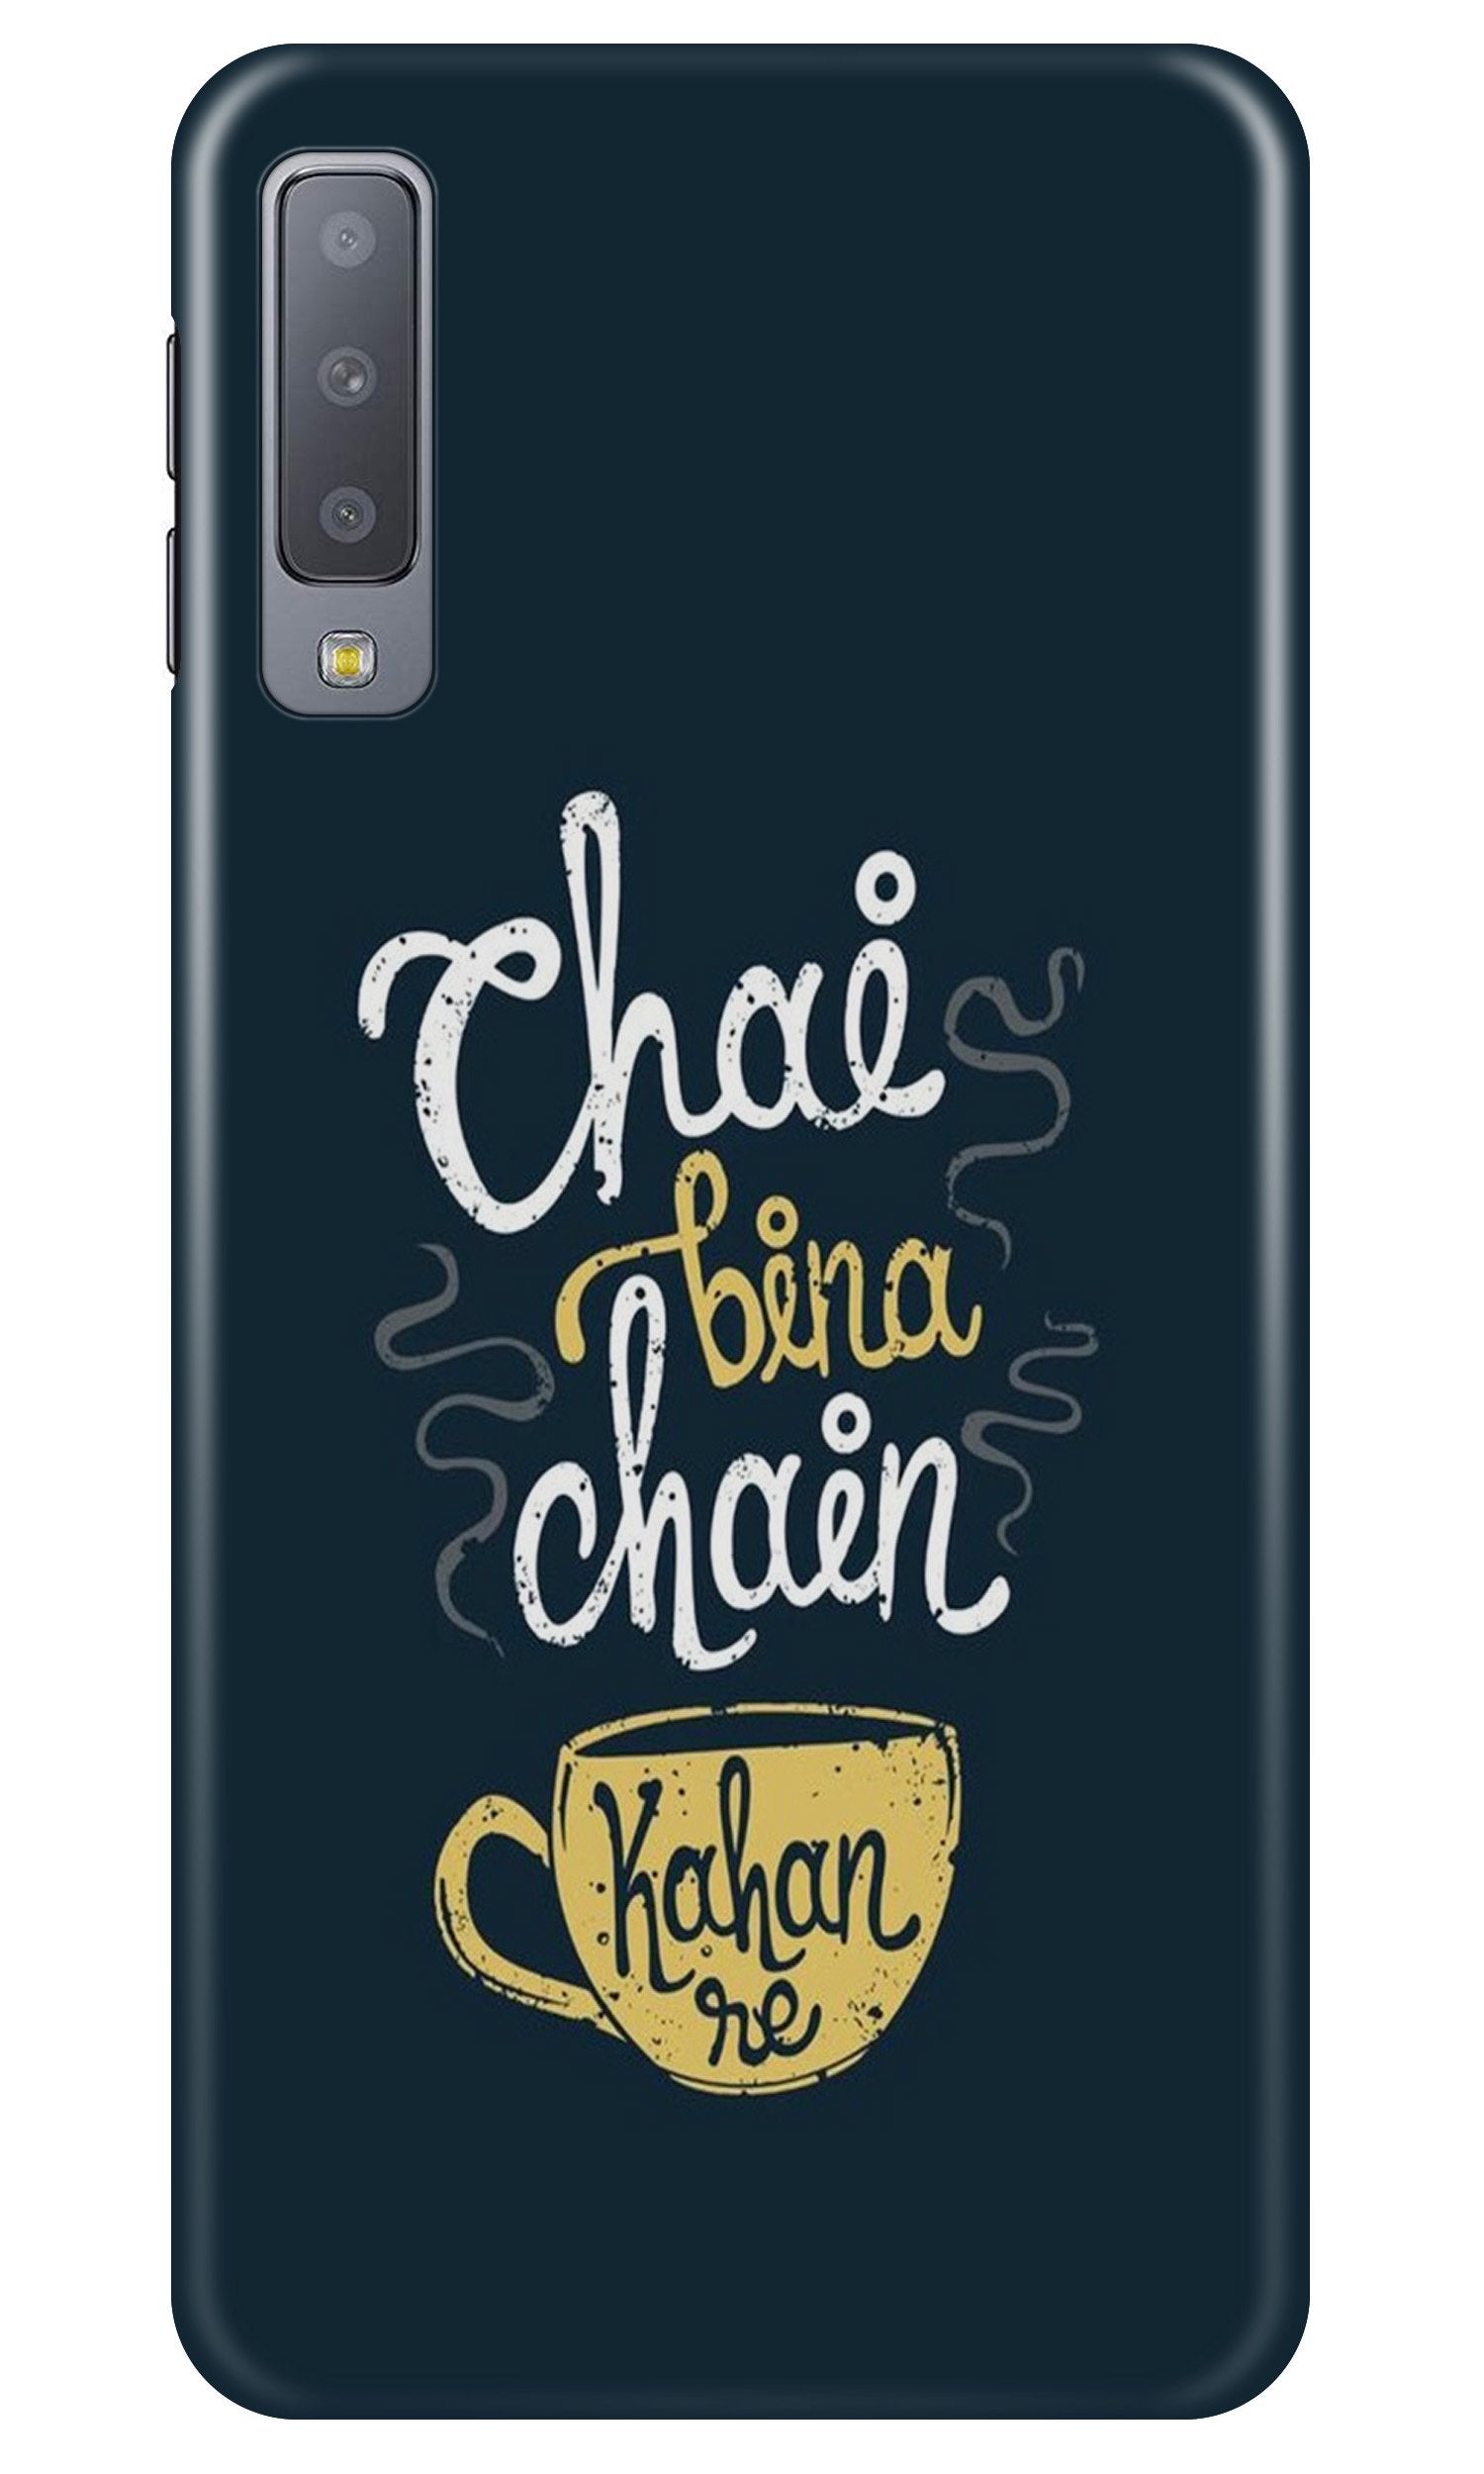 Chai Bina Chain Kahan Case for Samung Galaxy A70s(Design - 144)